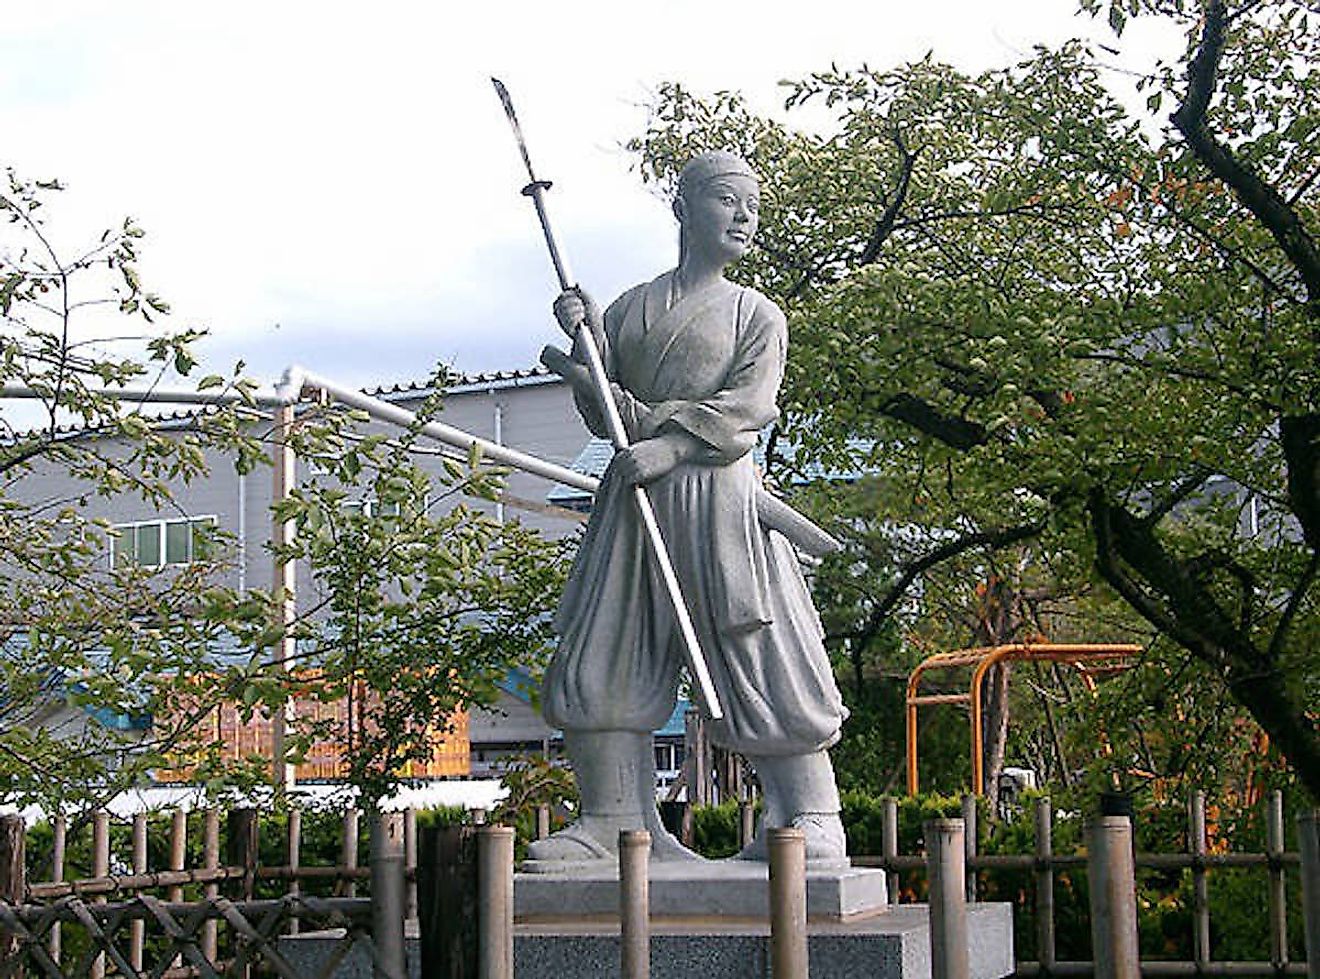 Nakano Takeko Statue at Hōkai-ji, Aizubange, Fukushima, Japan. Image credit: Torstein Barnhardt/Wikimedia.org